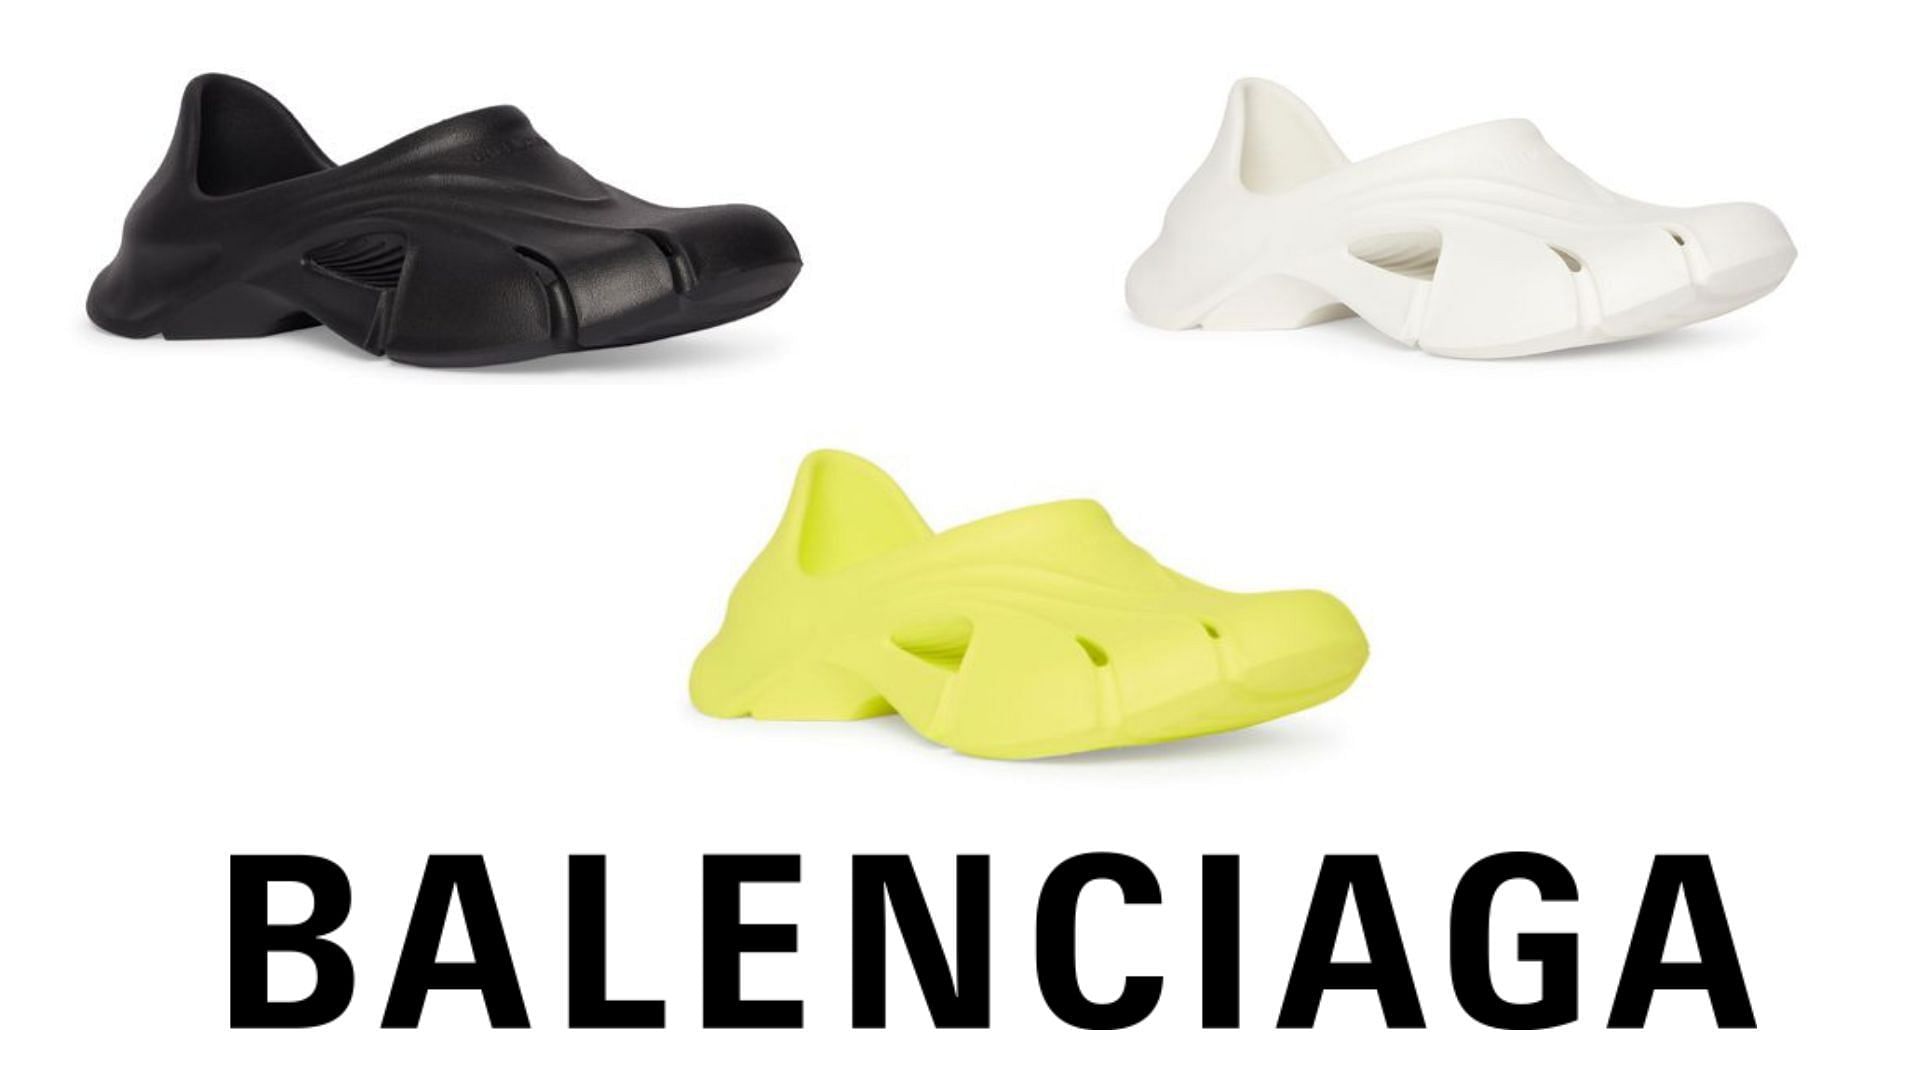 Balenciaga launched its Mold Closed clogs in three colorways (Image via Sportskeeda)